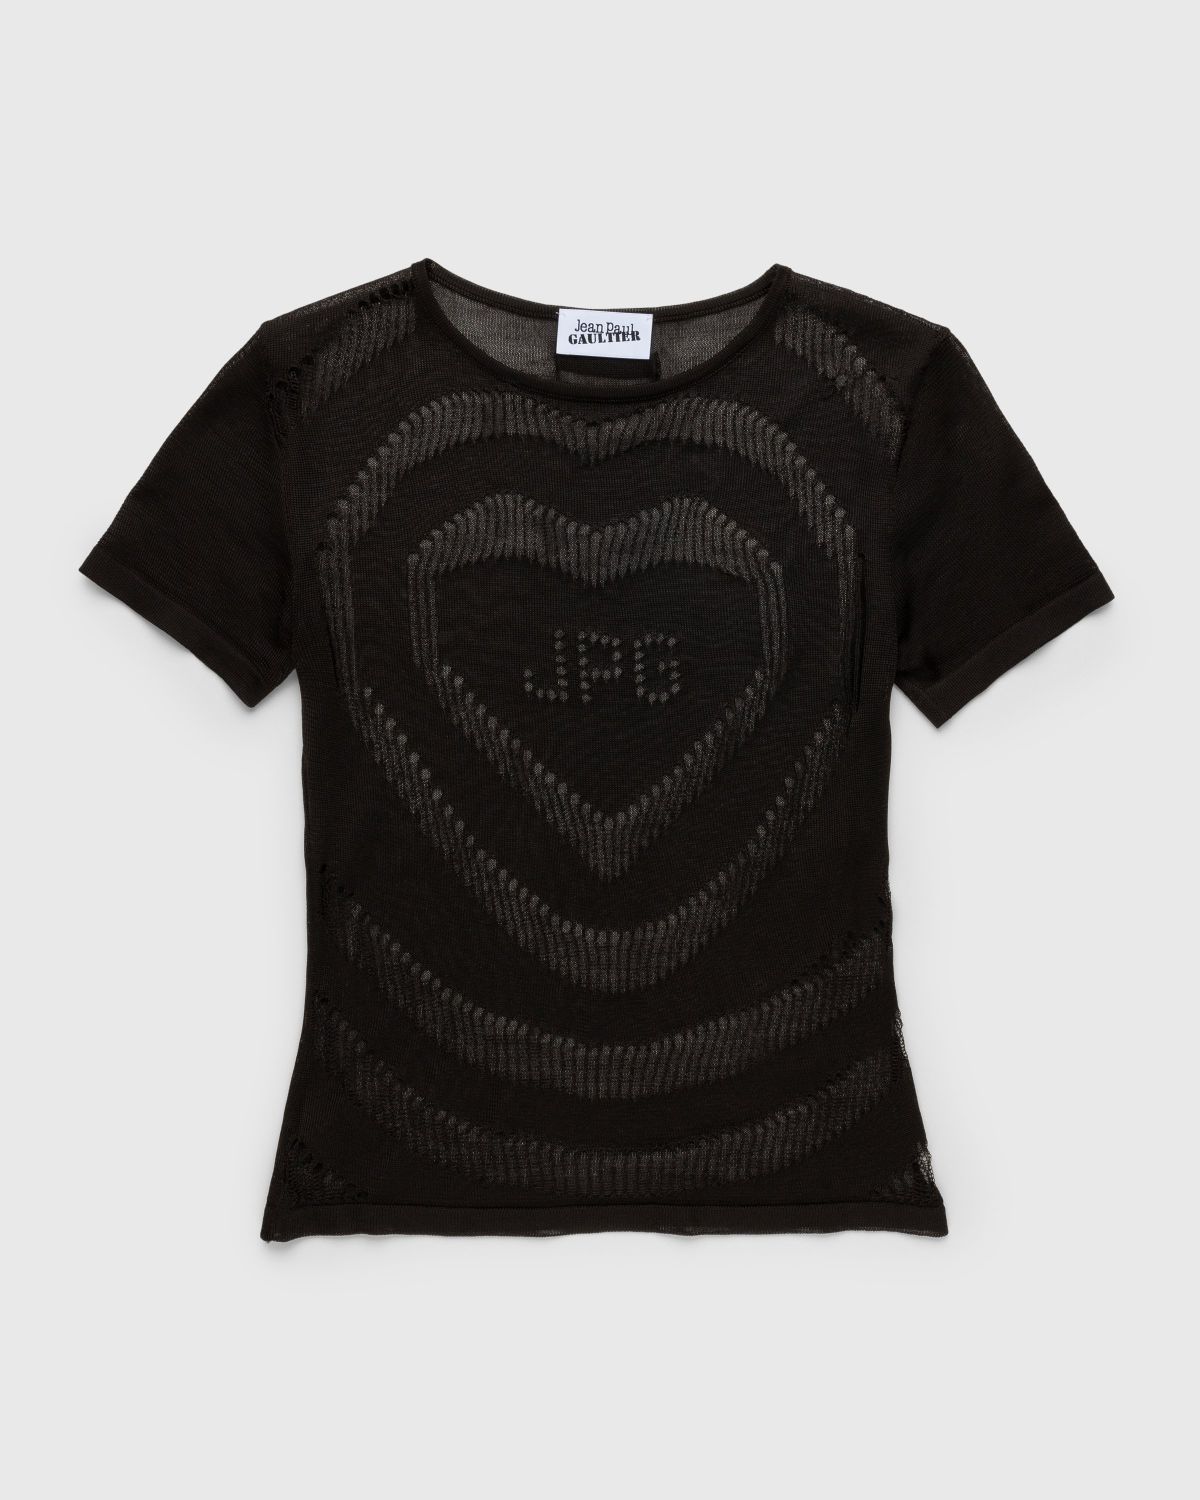 Jean Paul Gaultier – Open-Worked JPG Heart T-Shirt Dark Brown - T-shirts - Brown - Image 1